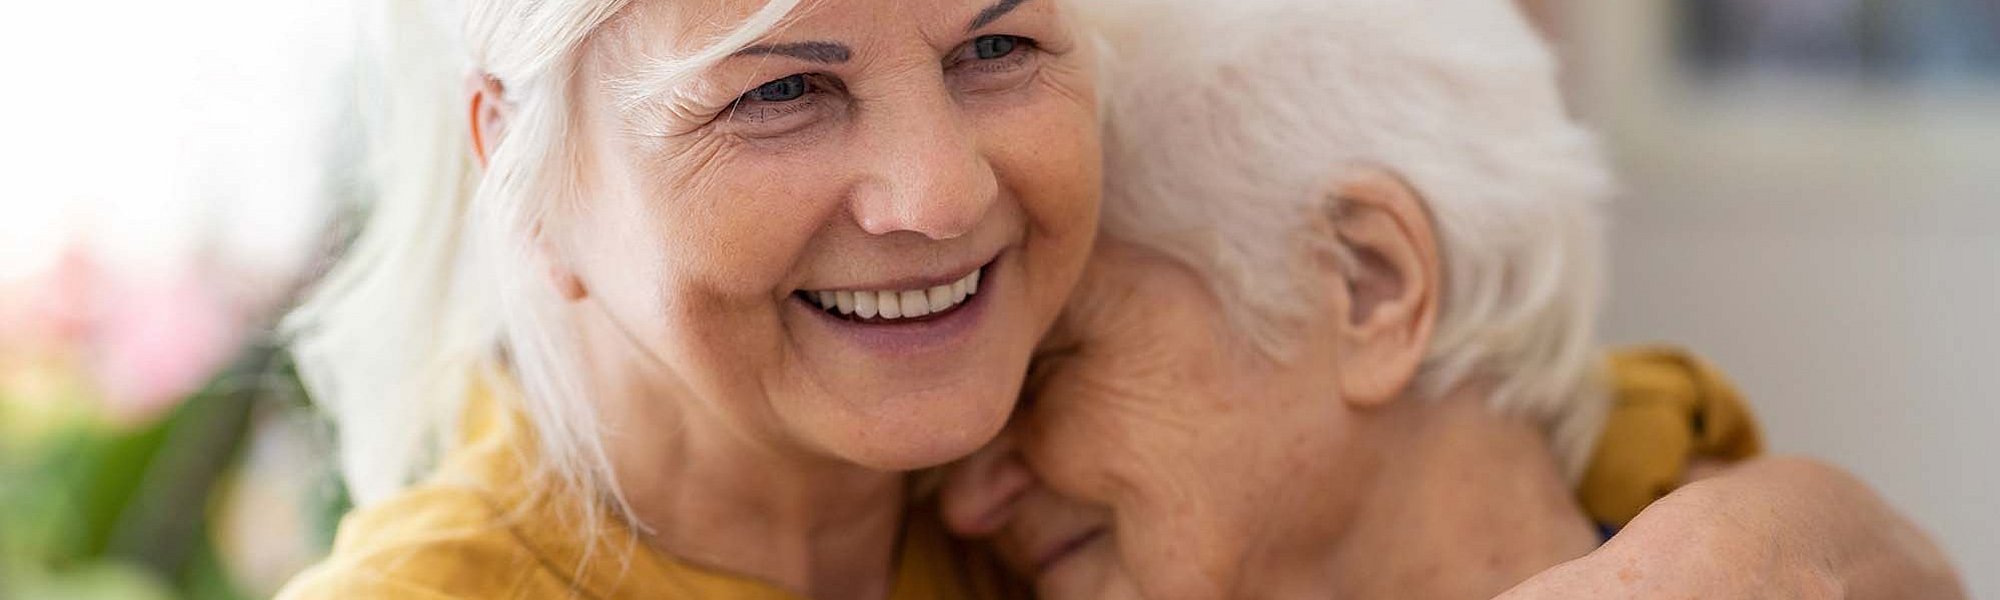 Eine Frau hält eine ältere Frau im Arm und lächelt